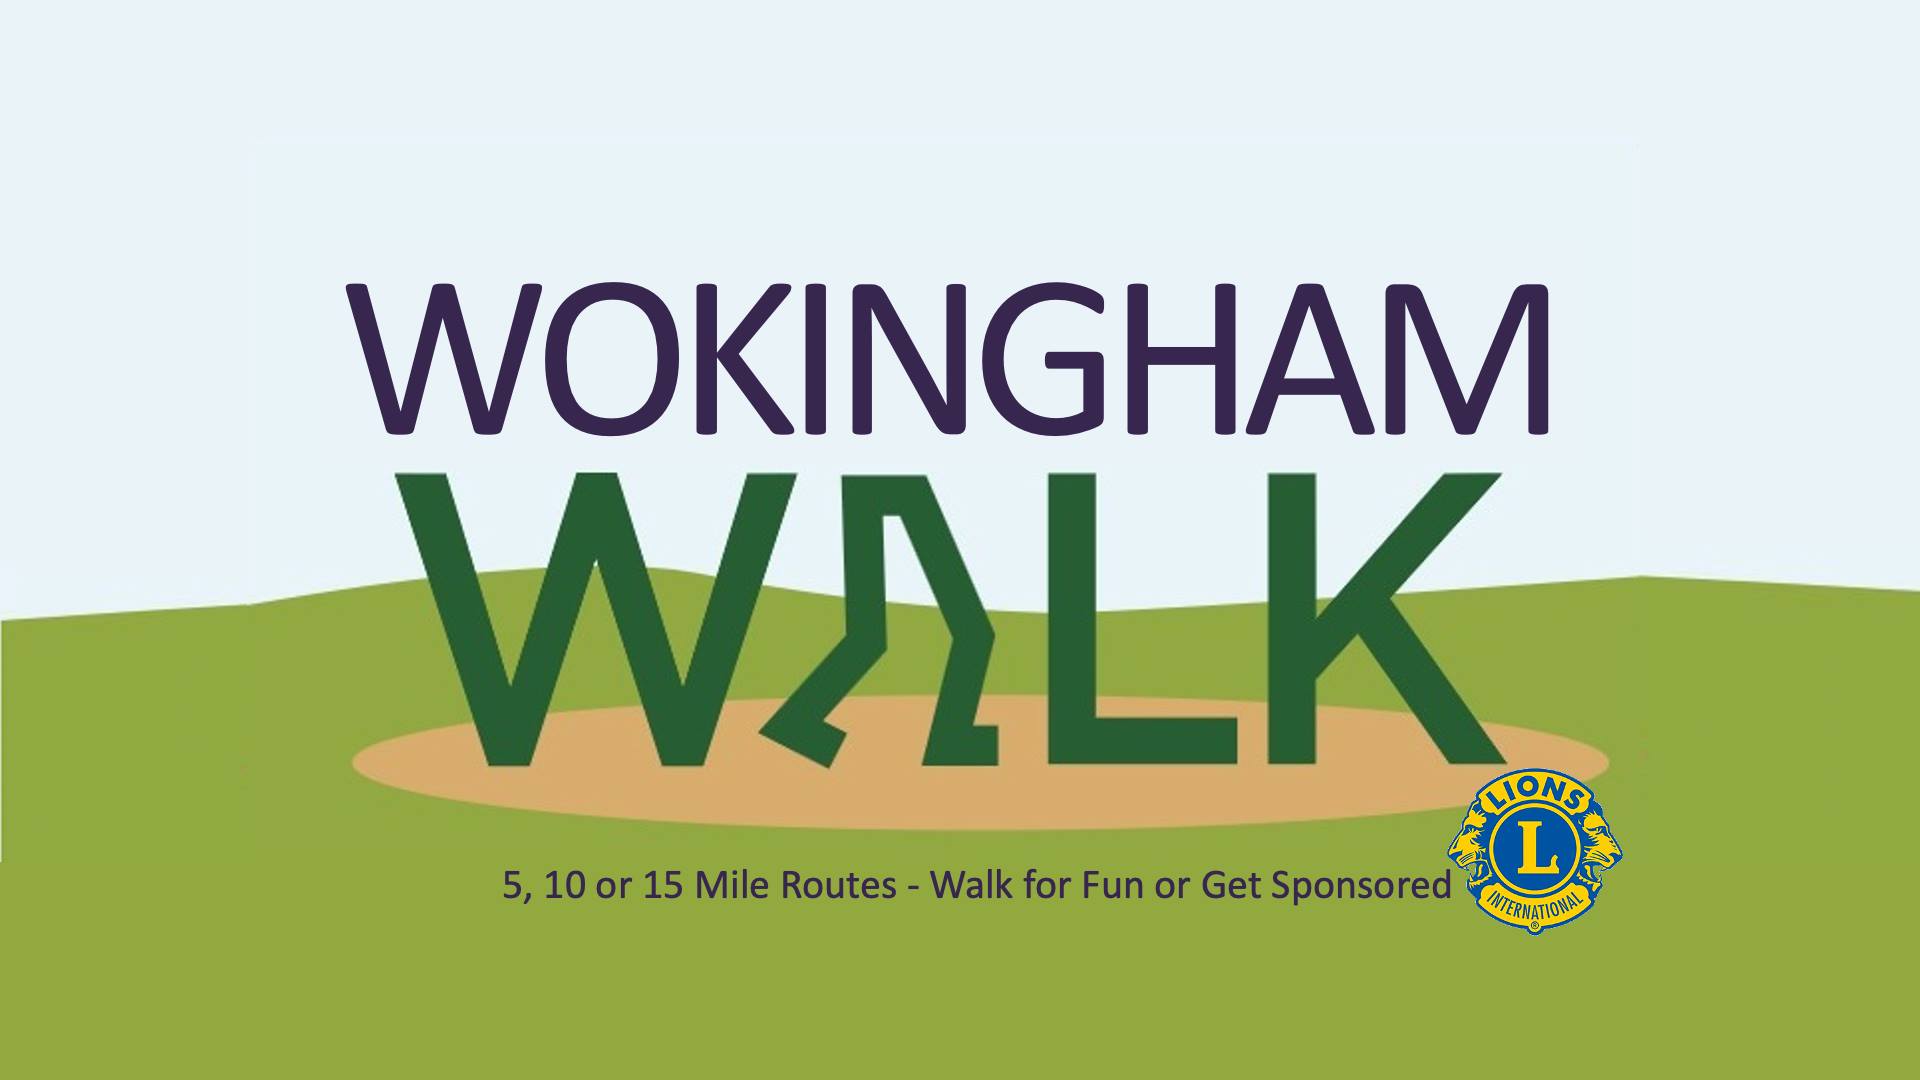 Wokingham Walk